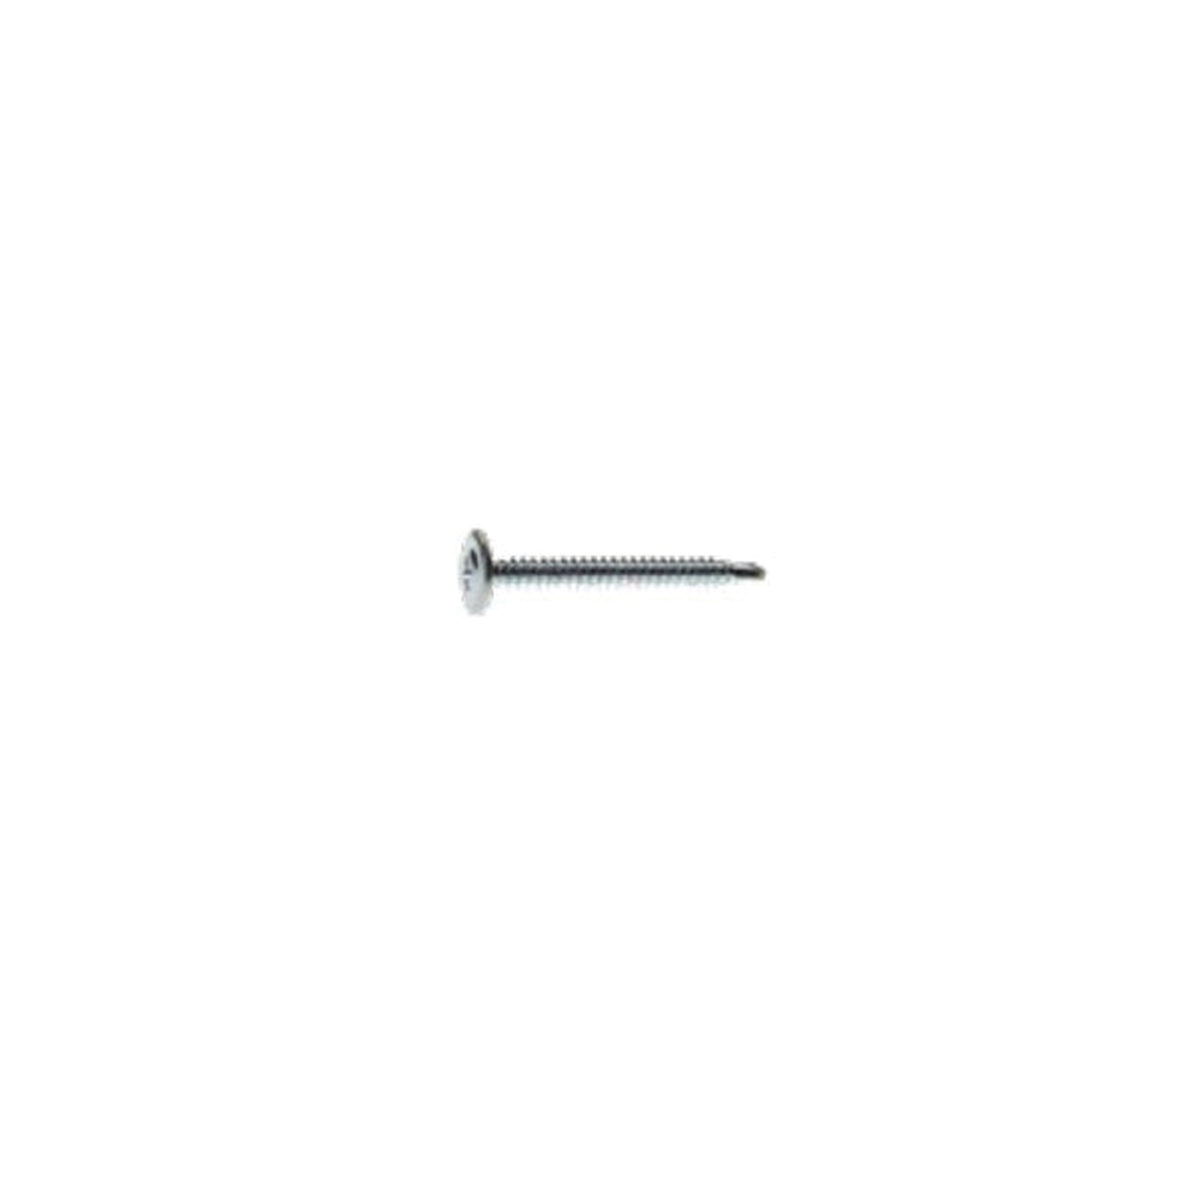 NMTD81001 Screw, #8 Thread, 1 in L, Fine Thread, Truss Head, Phillips Drive, Self-Drilling Point, Steel